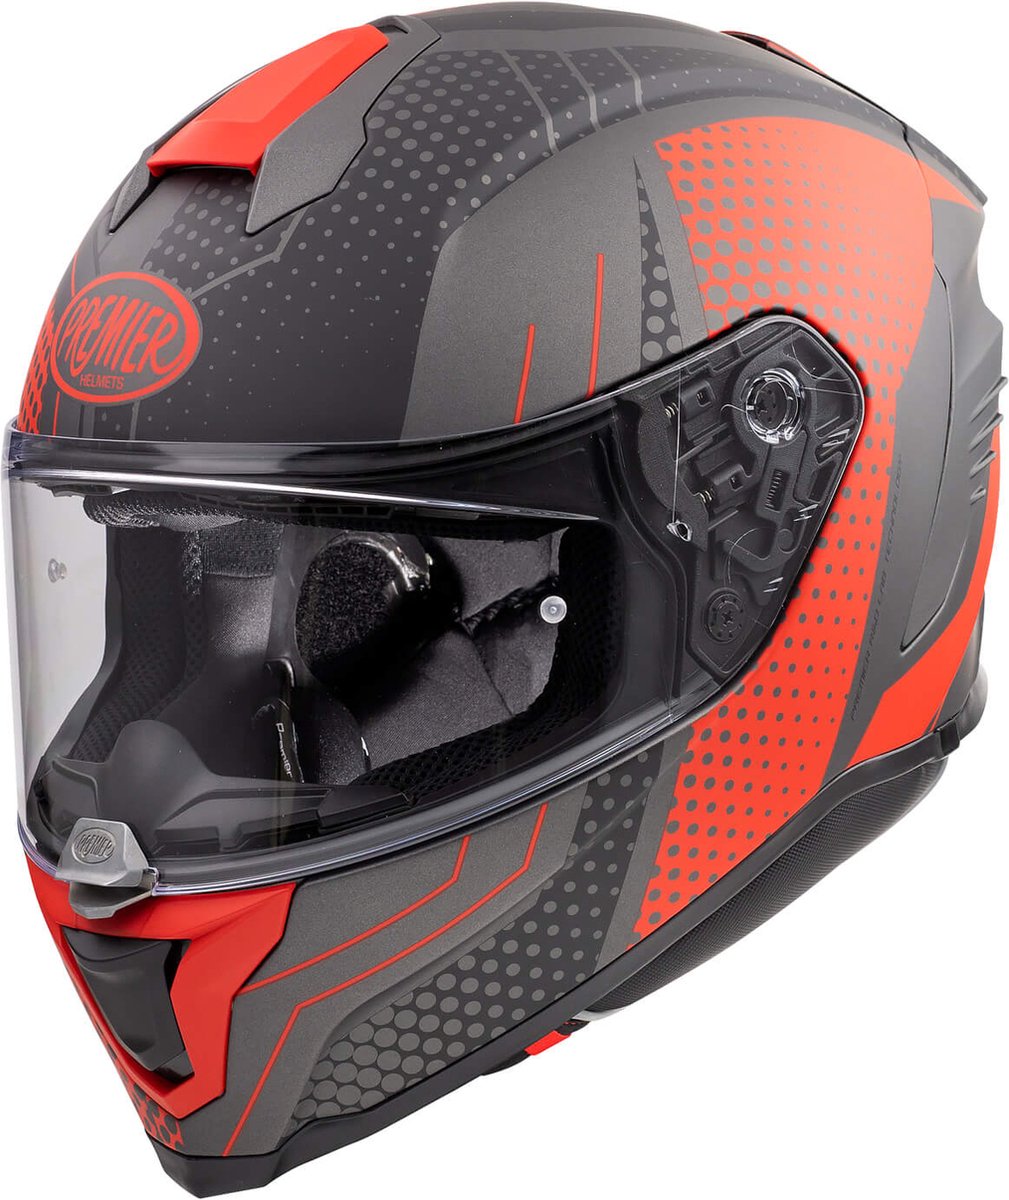 Premier Hyper Bp 92 Bm Helmet L - Maat L - Helm